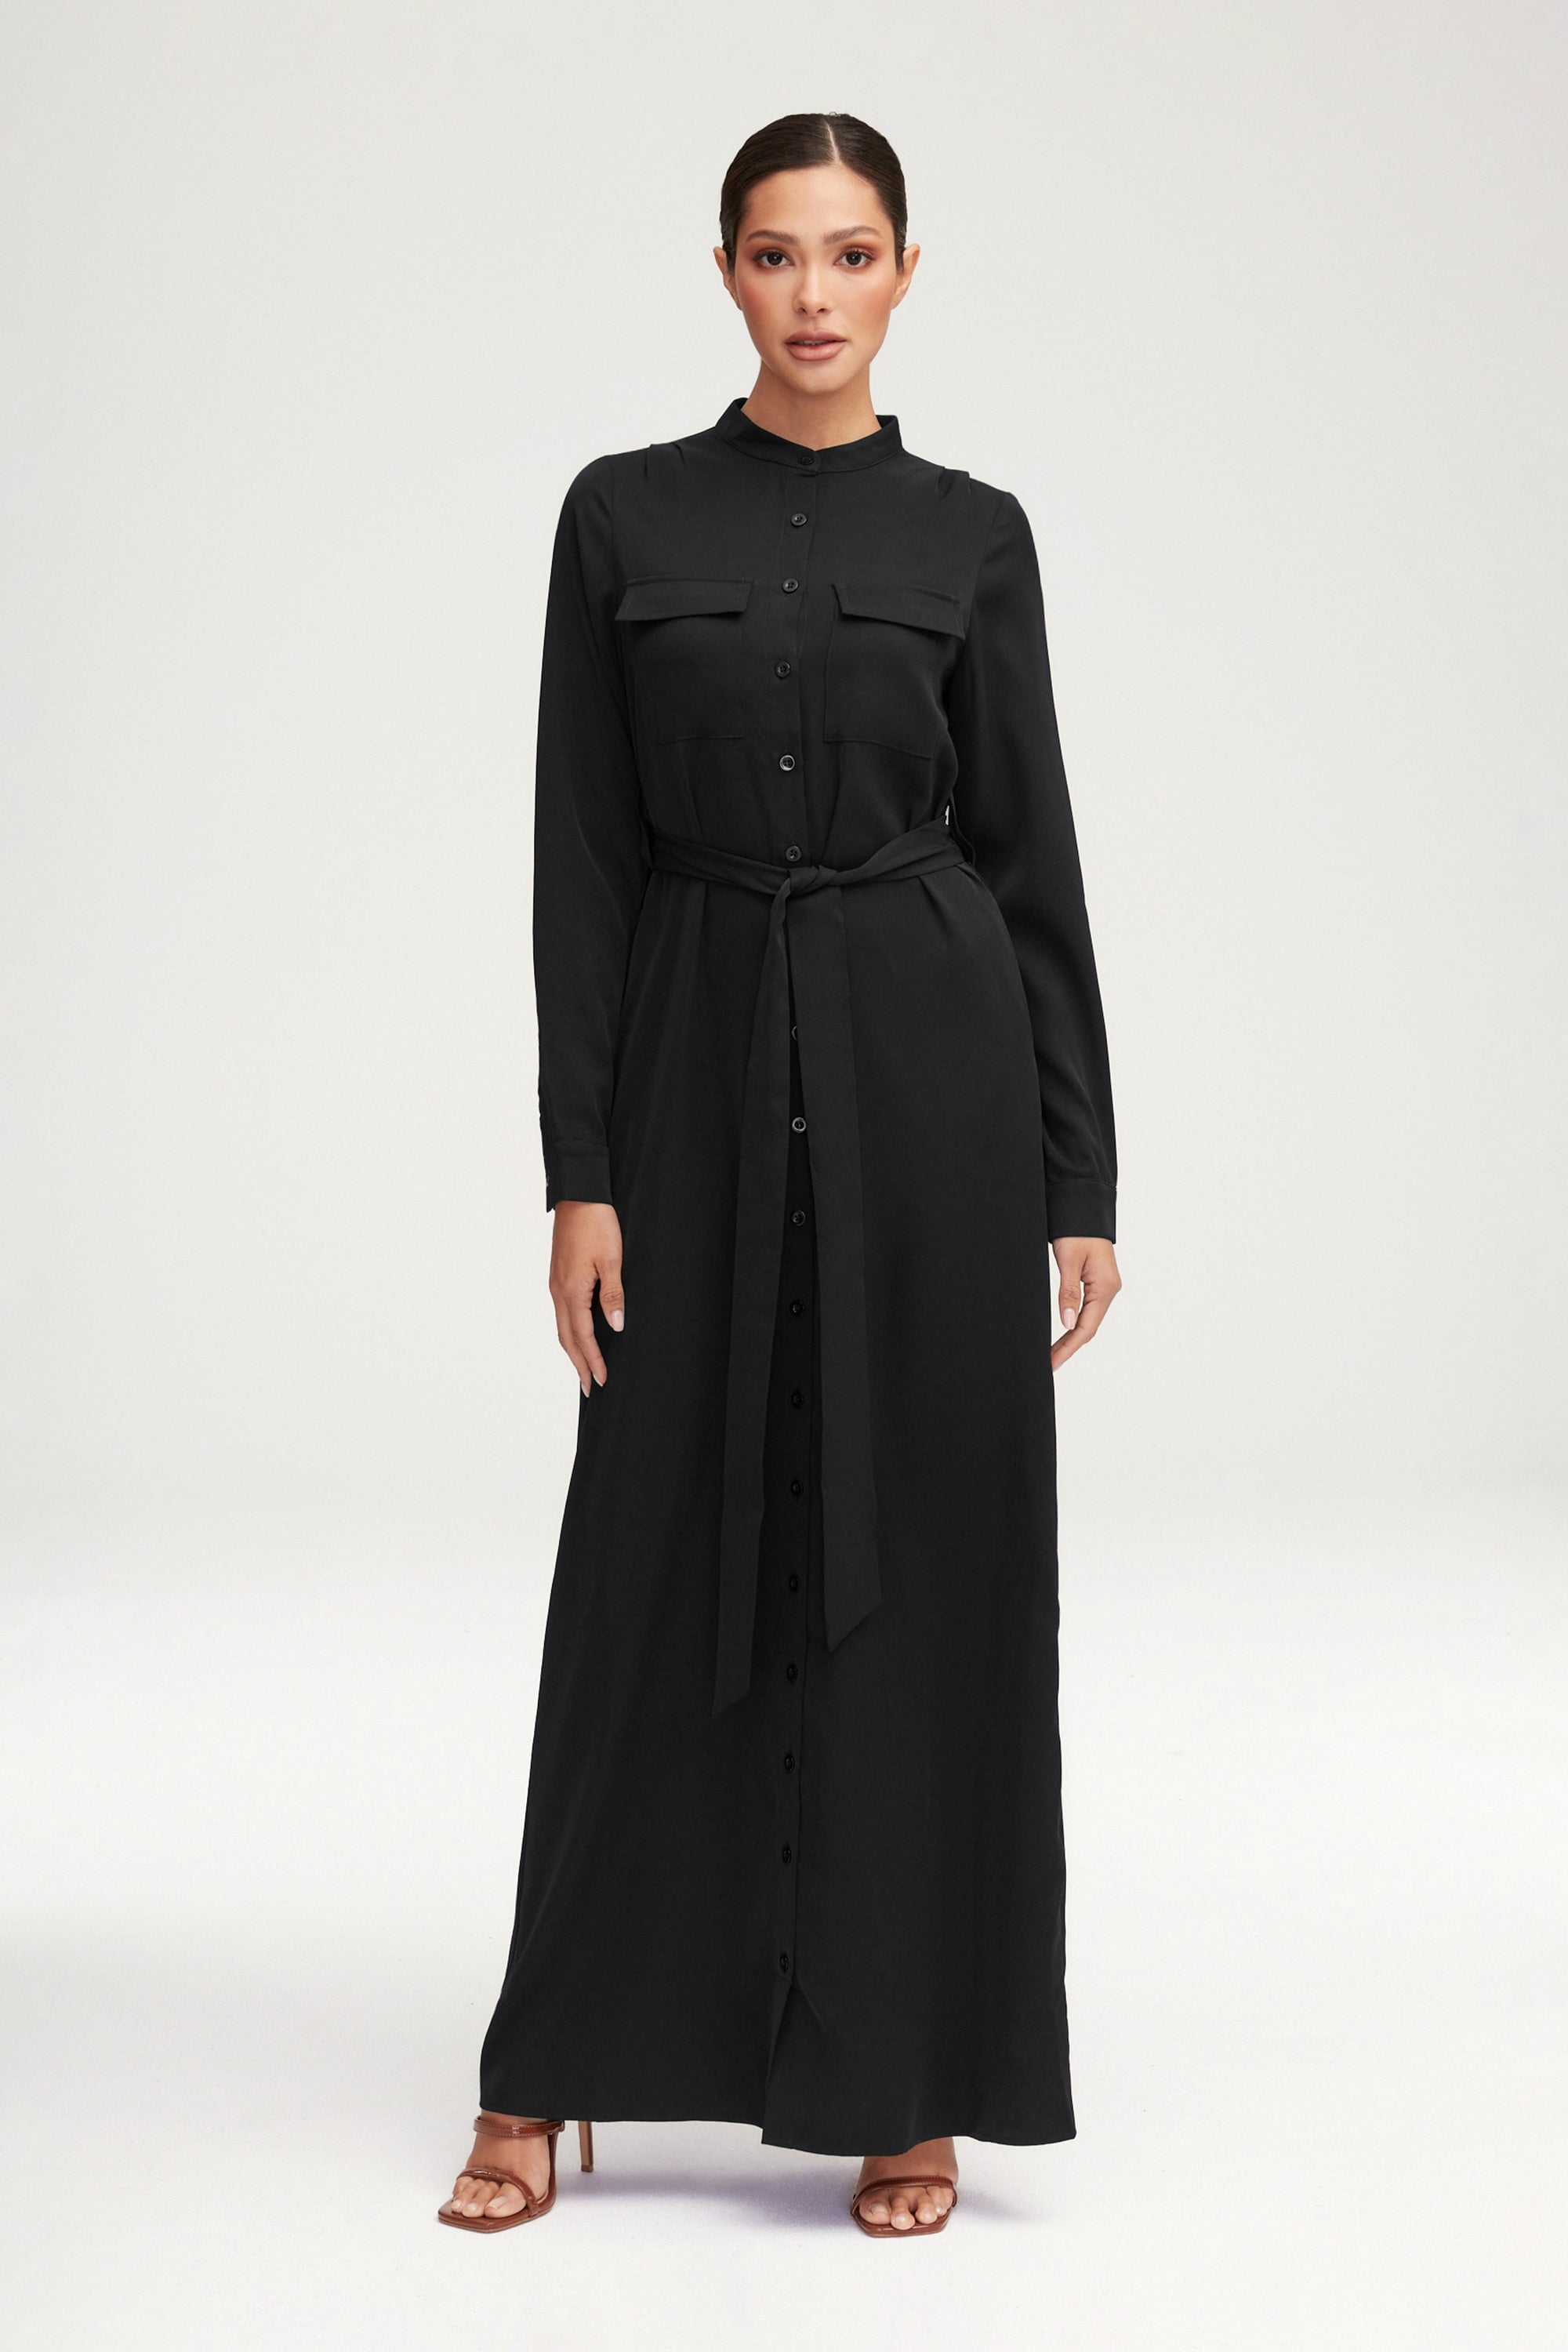 Olivia Button Down Utility Maxi Dress - Black Clothing Veiled 